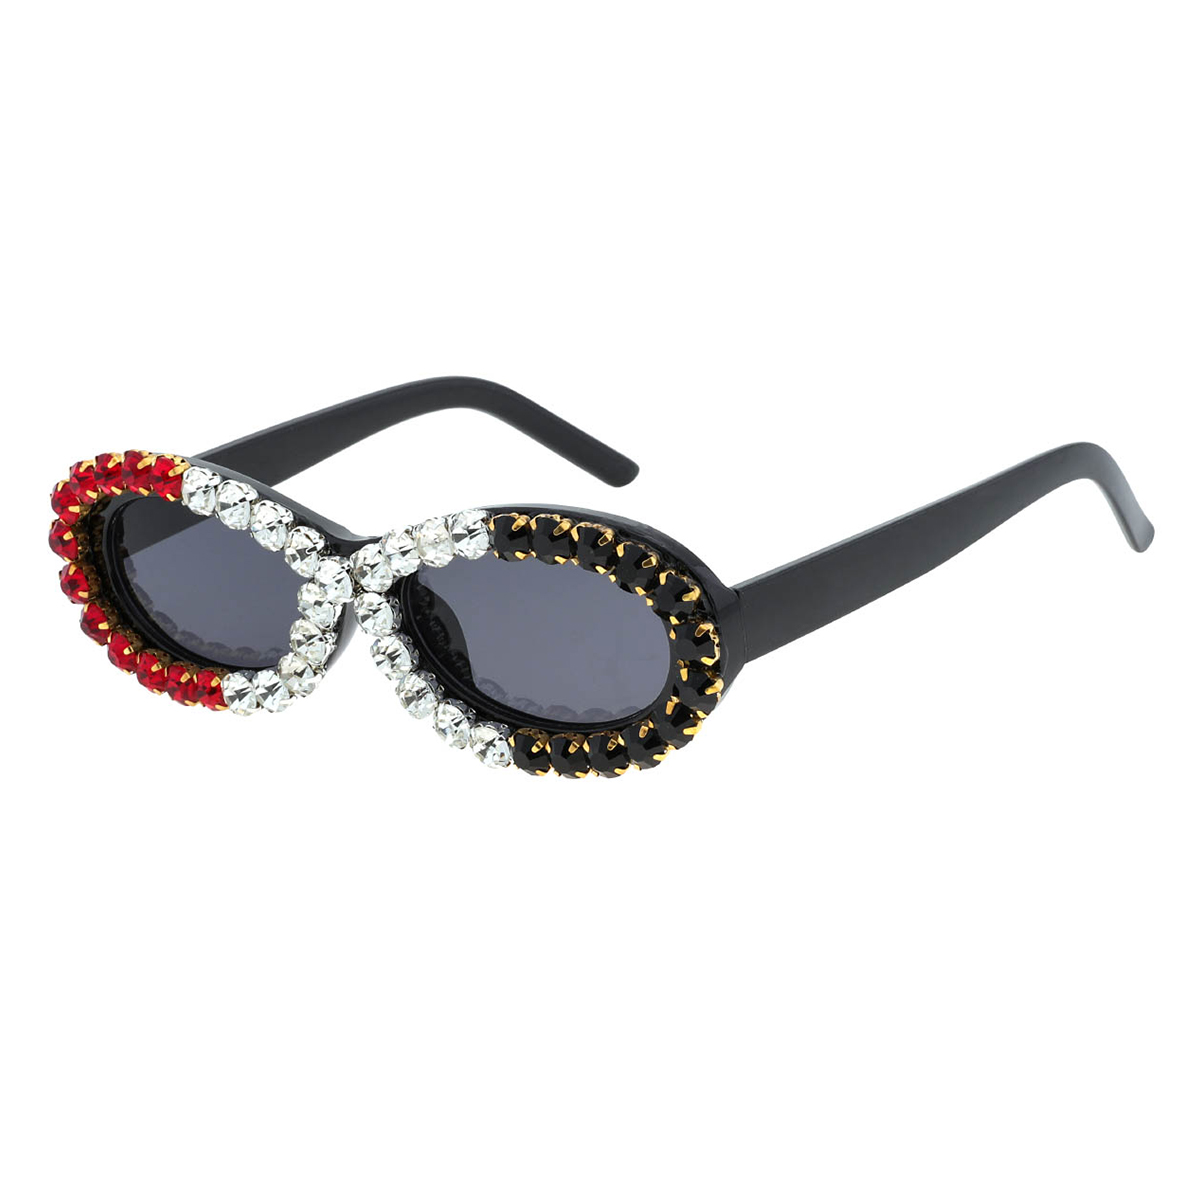 Bias - Oval Red-Black Reading Glasses for Women